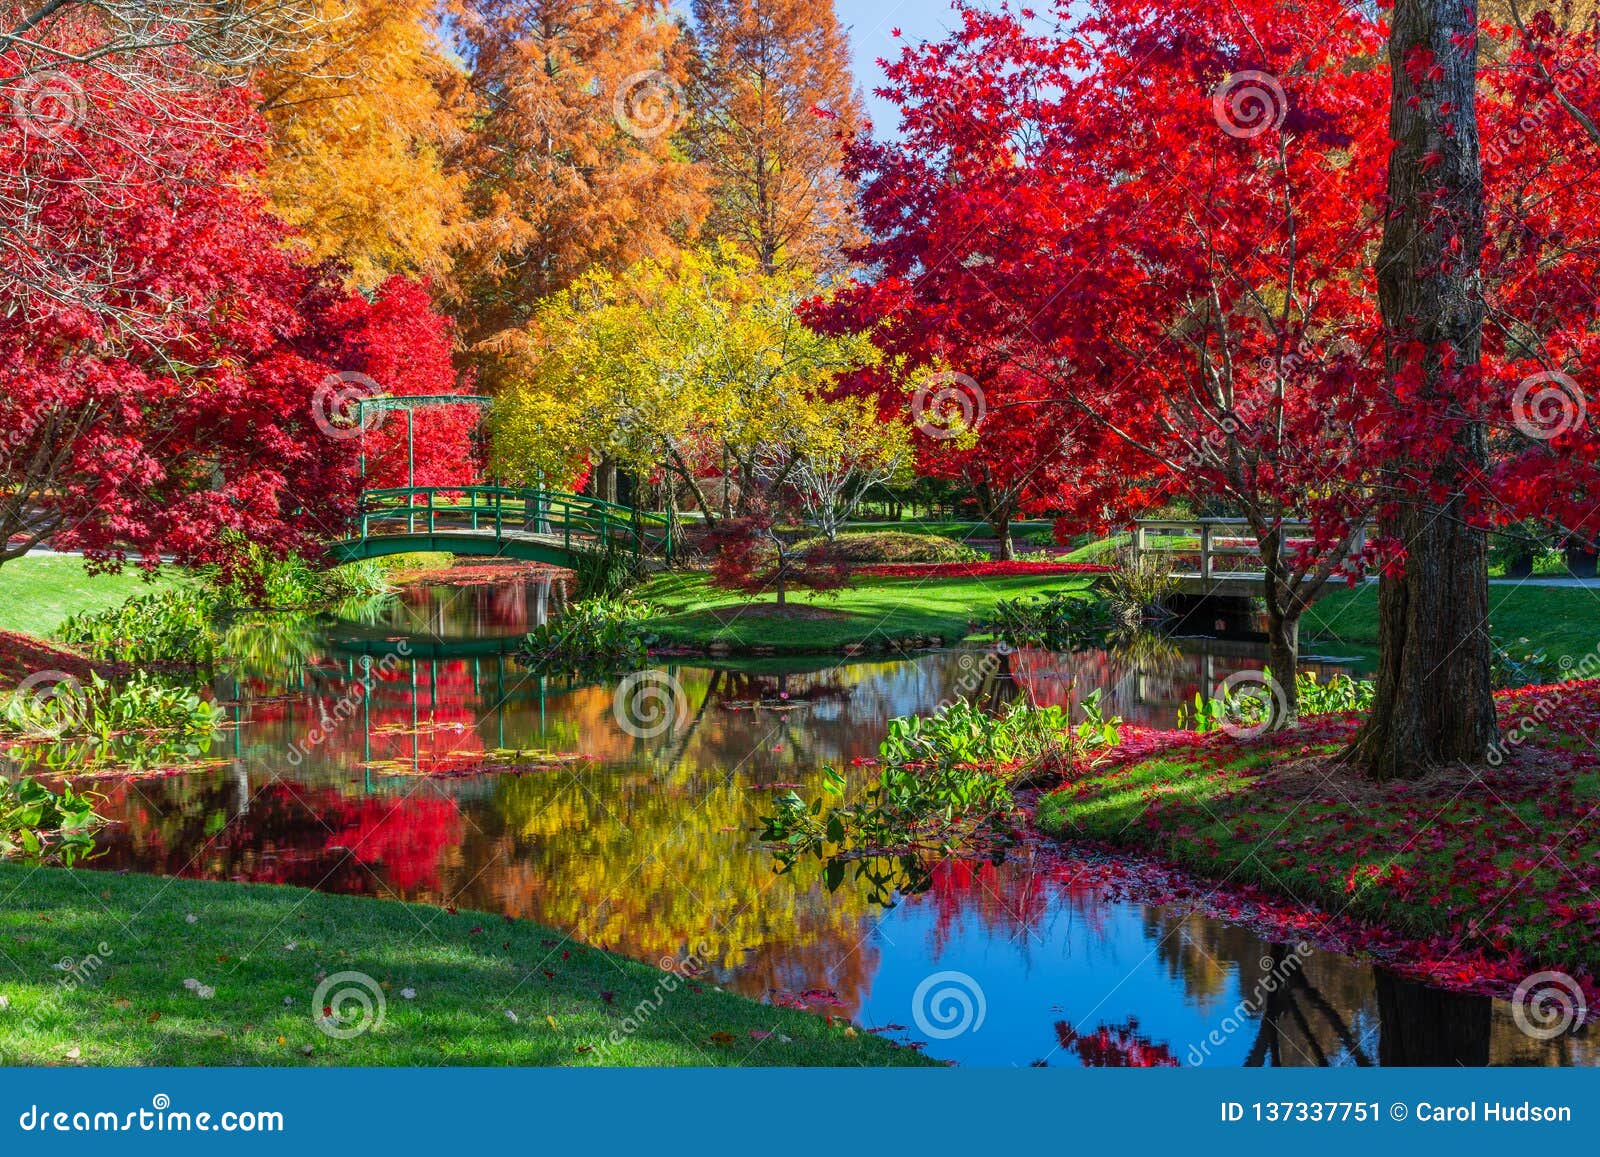 Beautiful Fall Foliage At Japanese Gardens In Georgia Stock Image